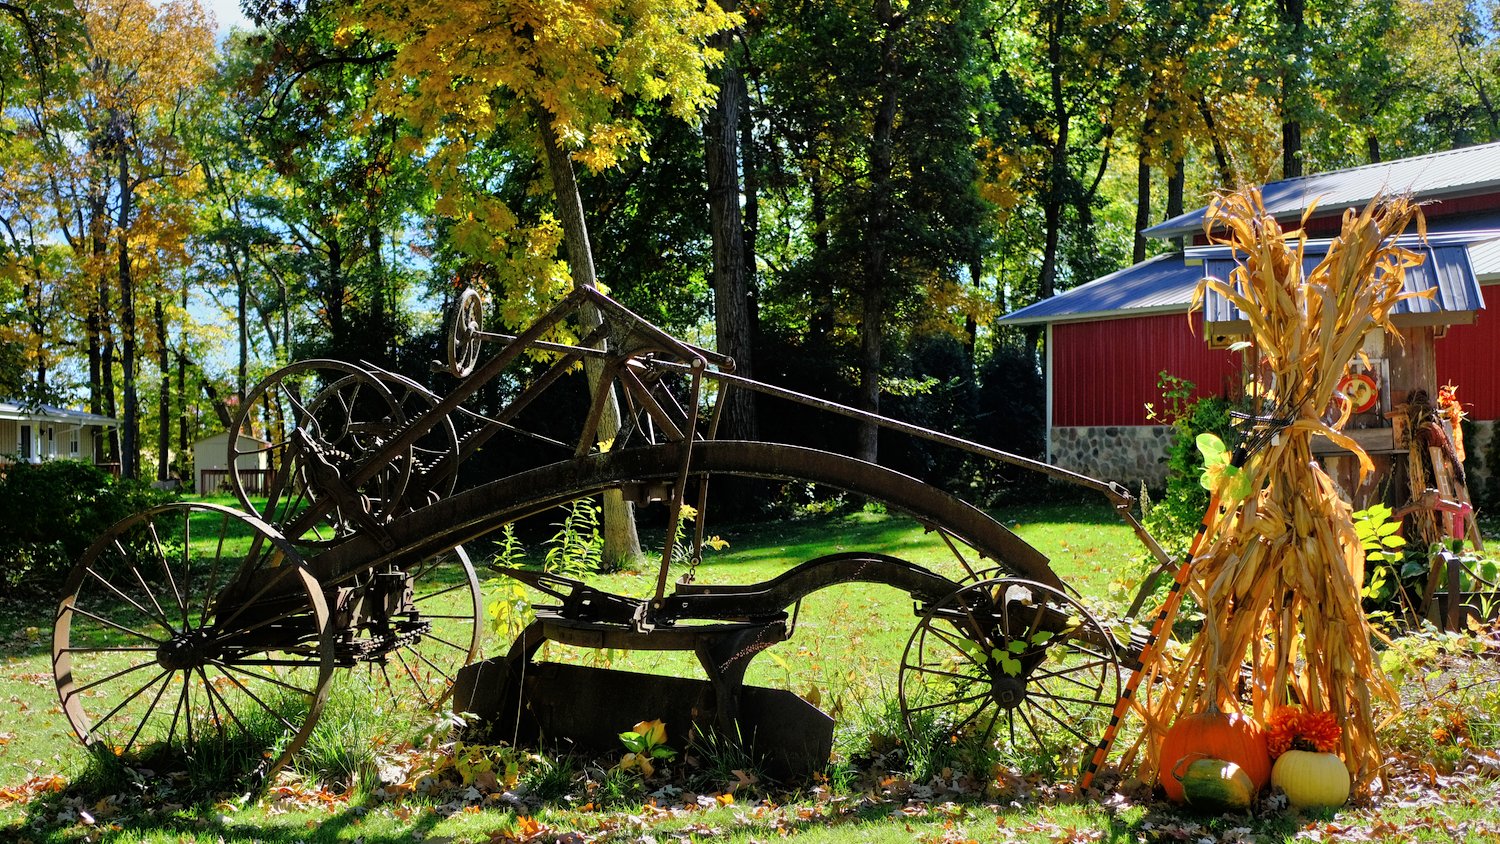 Seasonal display with antique farm equipment.